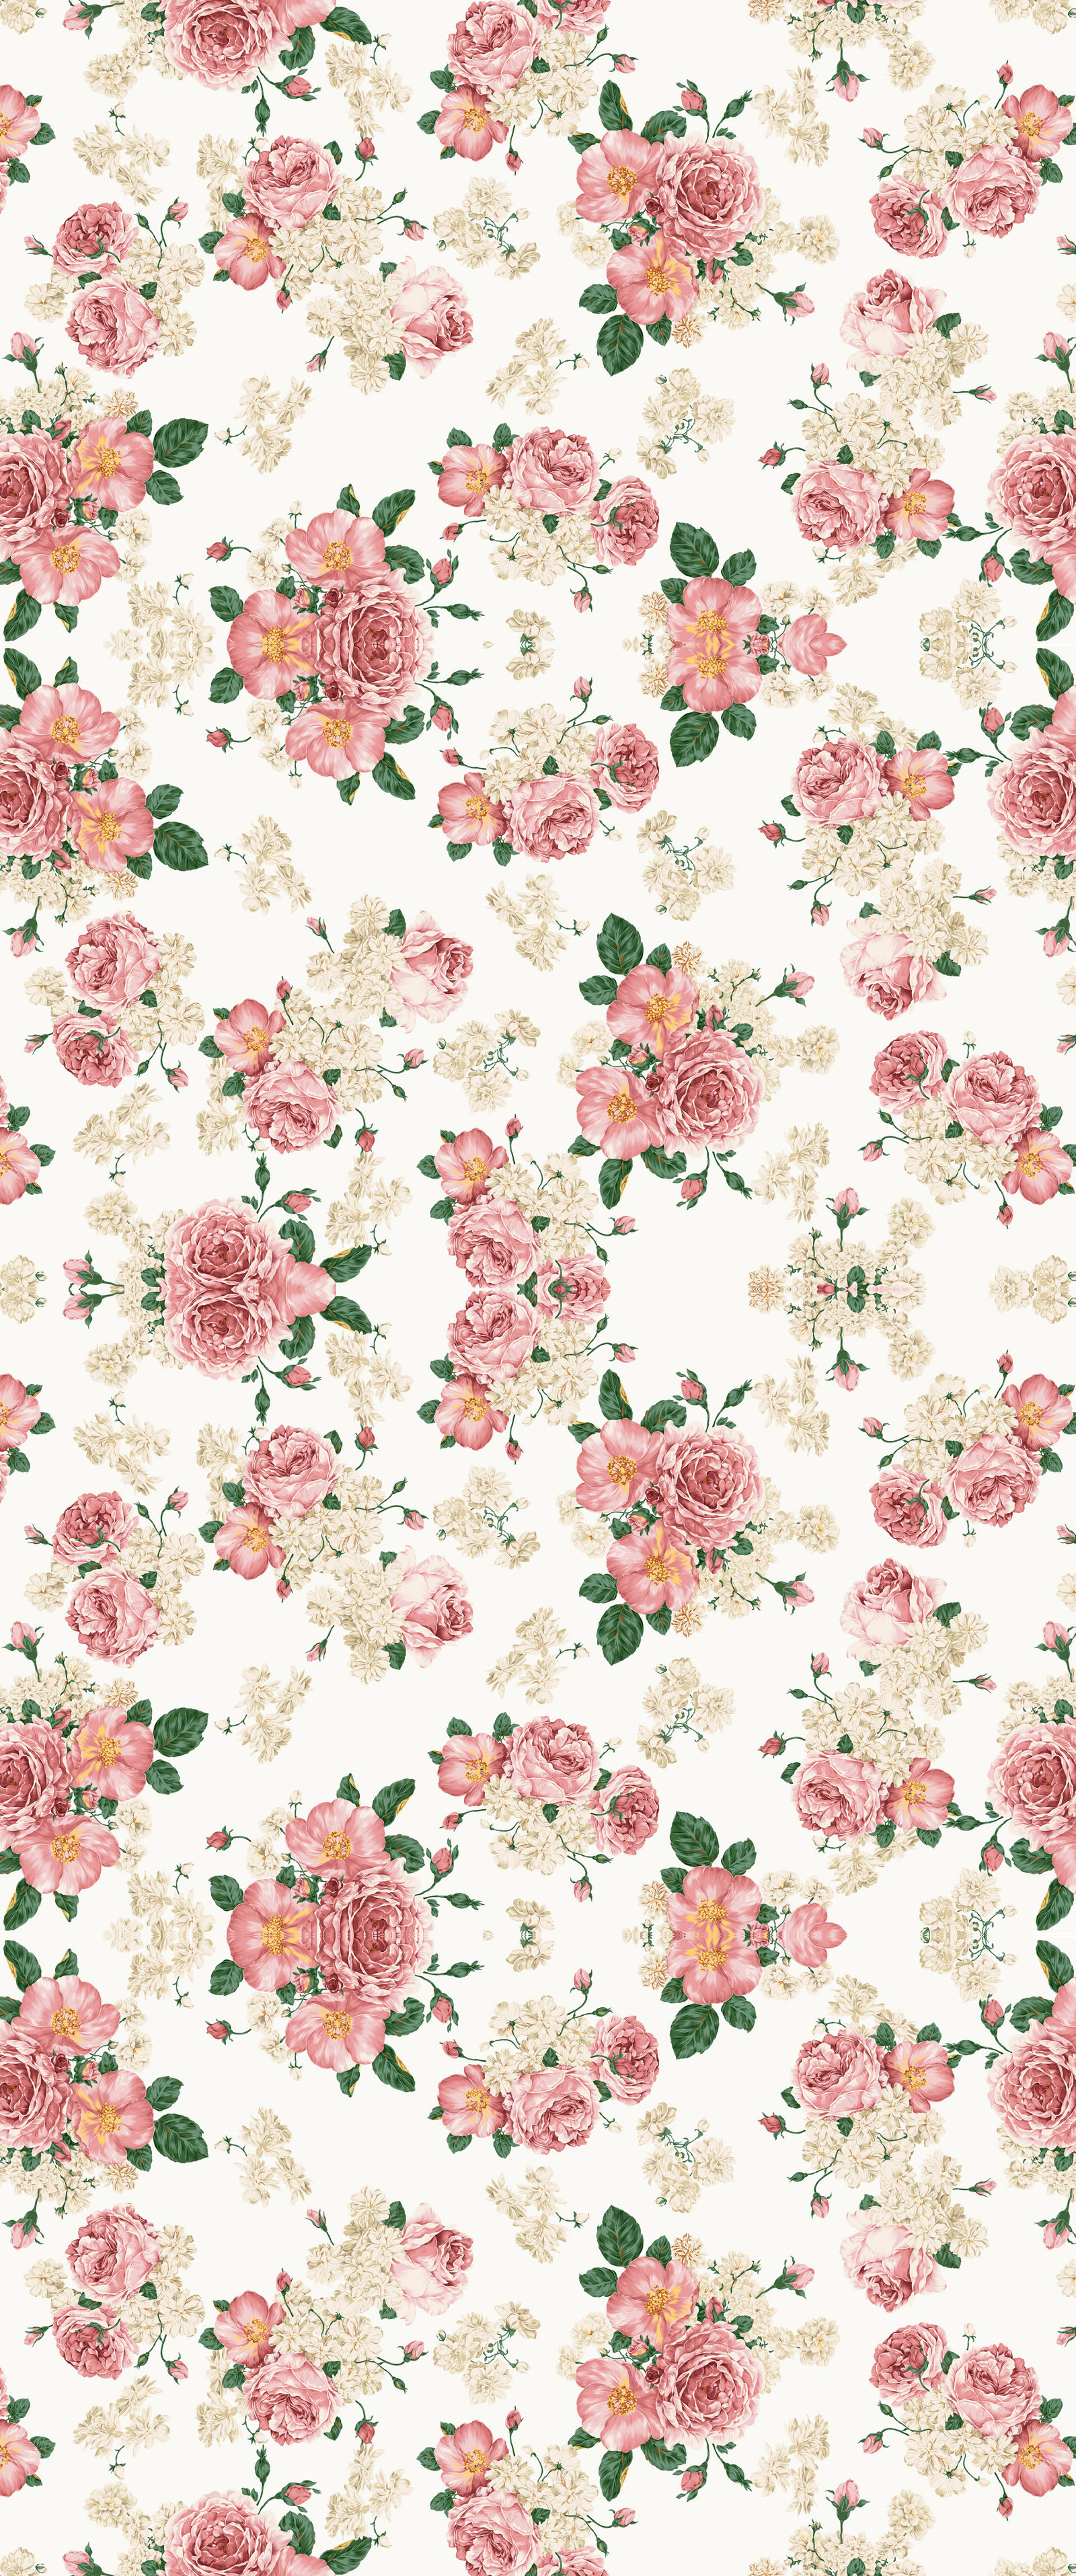 Rose pattern wallpaper by MissCake